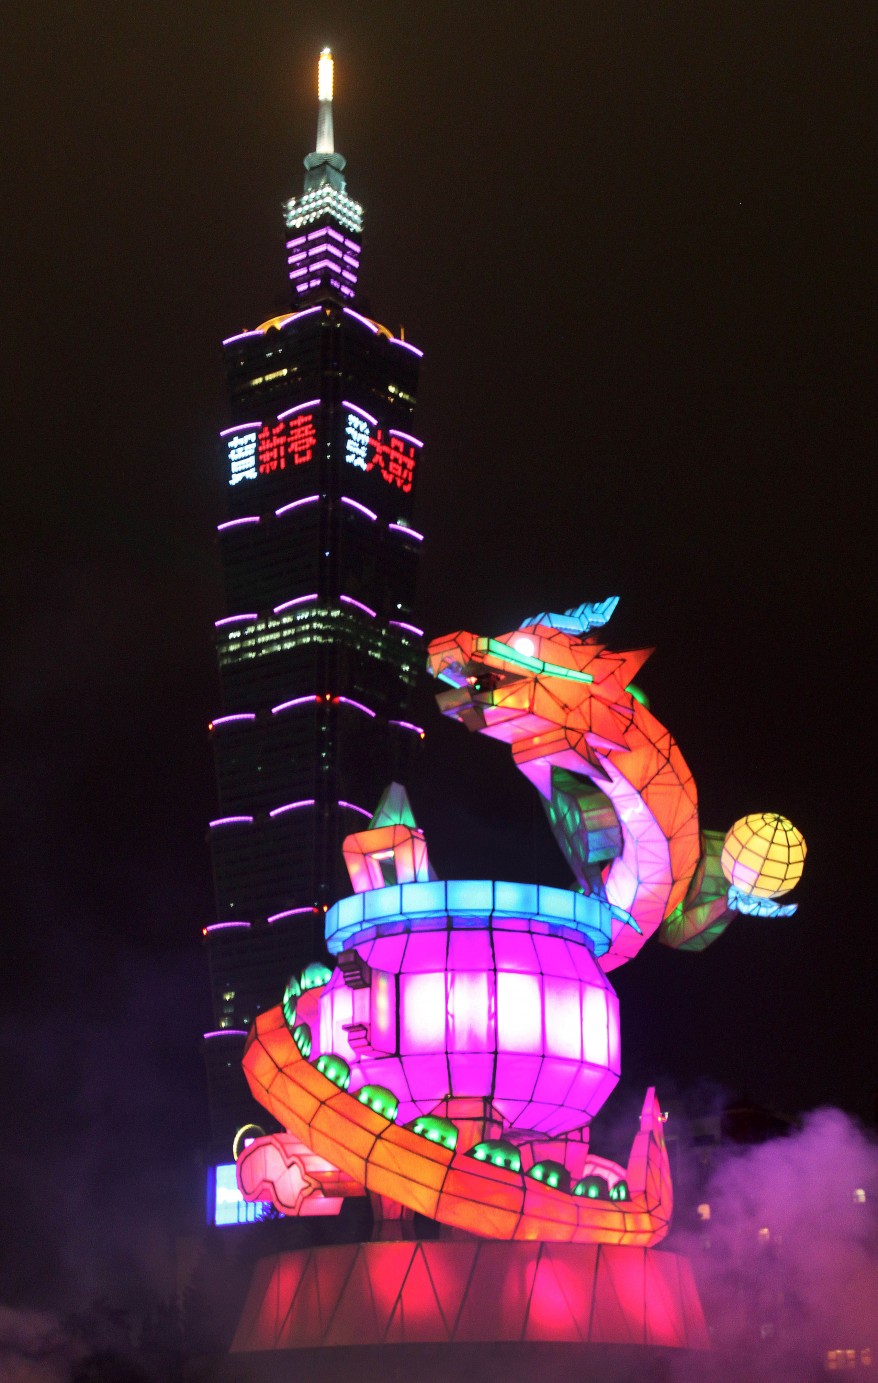 "Taiwan Chinese New Year"